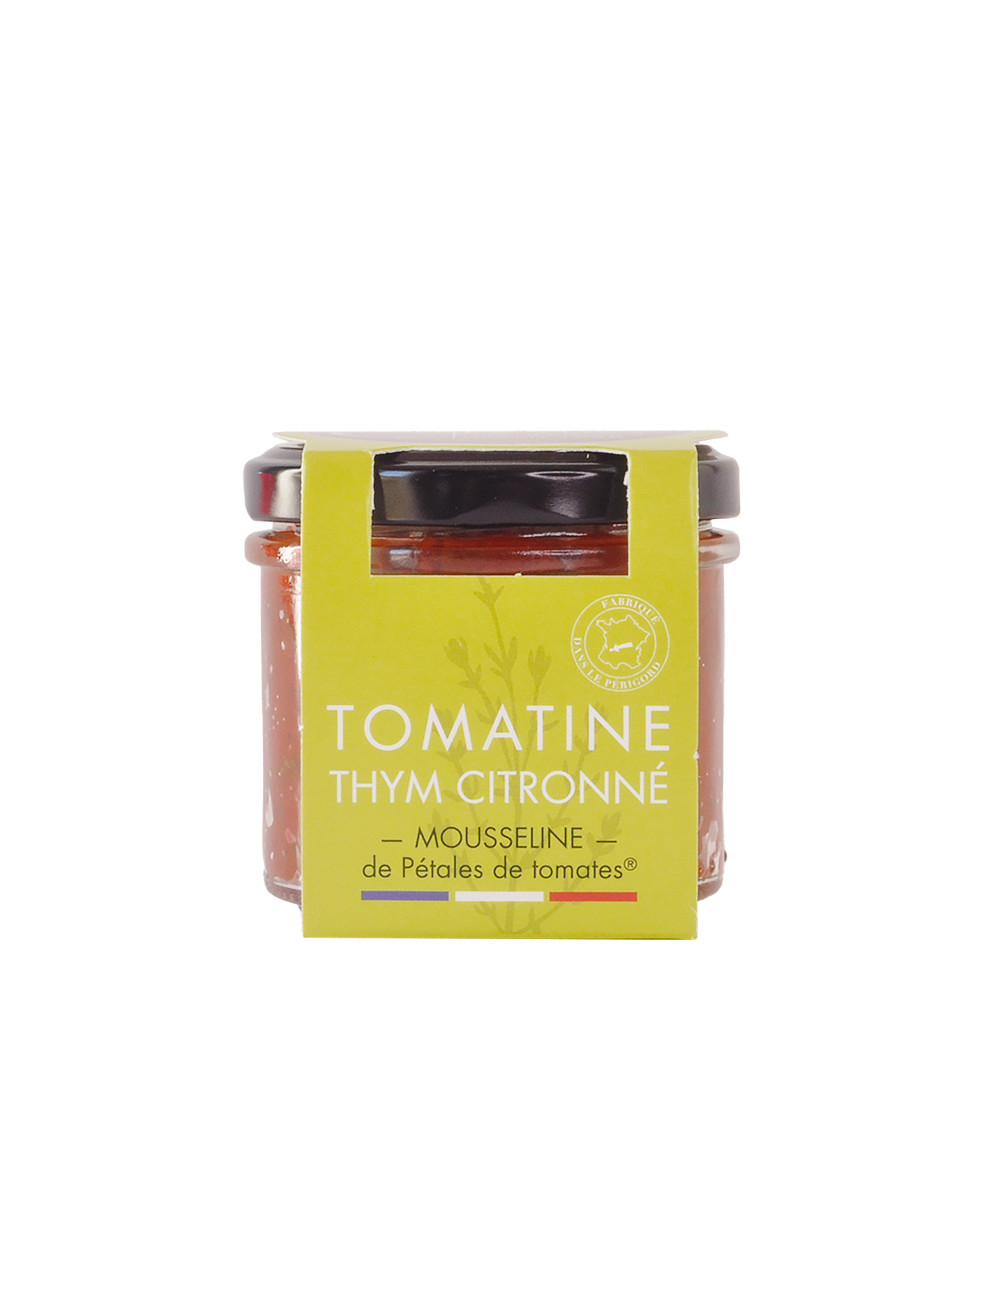 Tomatine Thym citronné Marc Peyrey